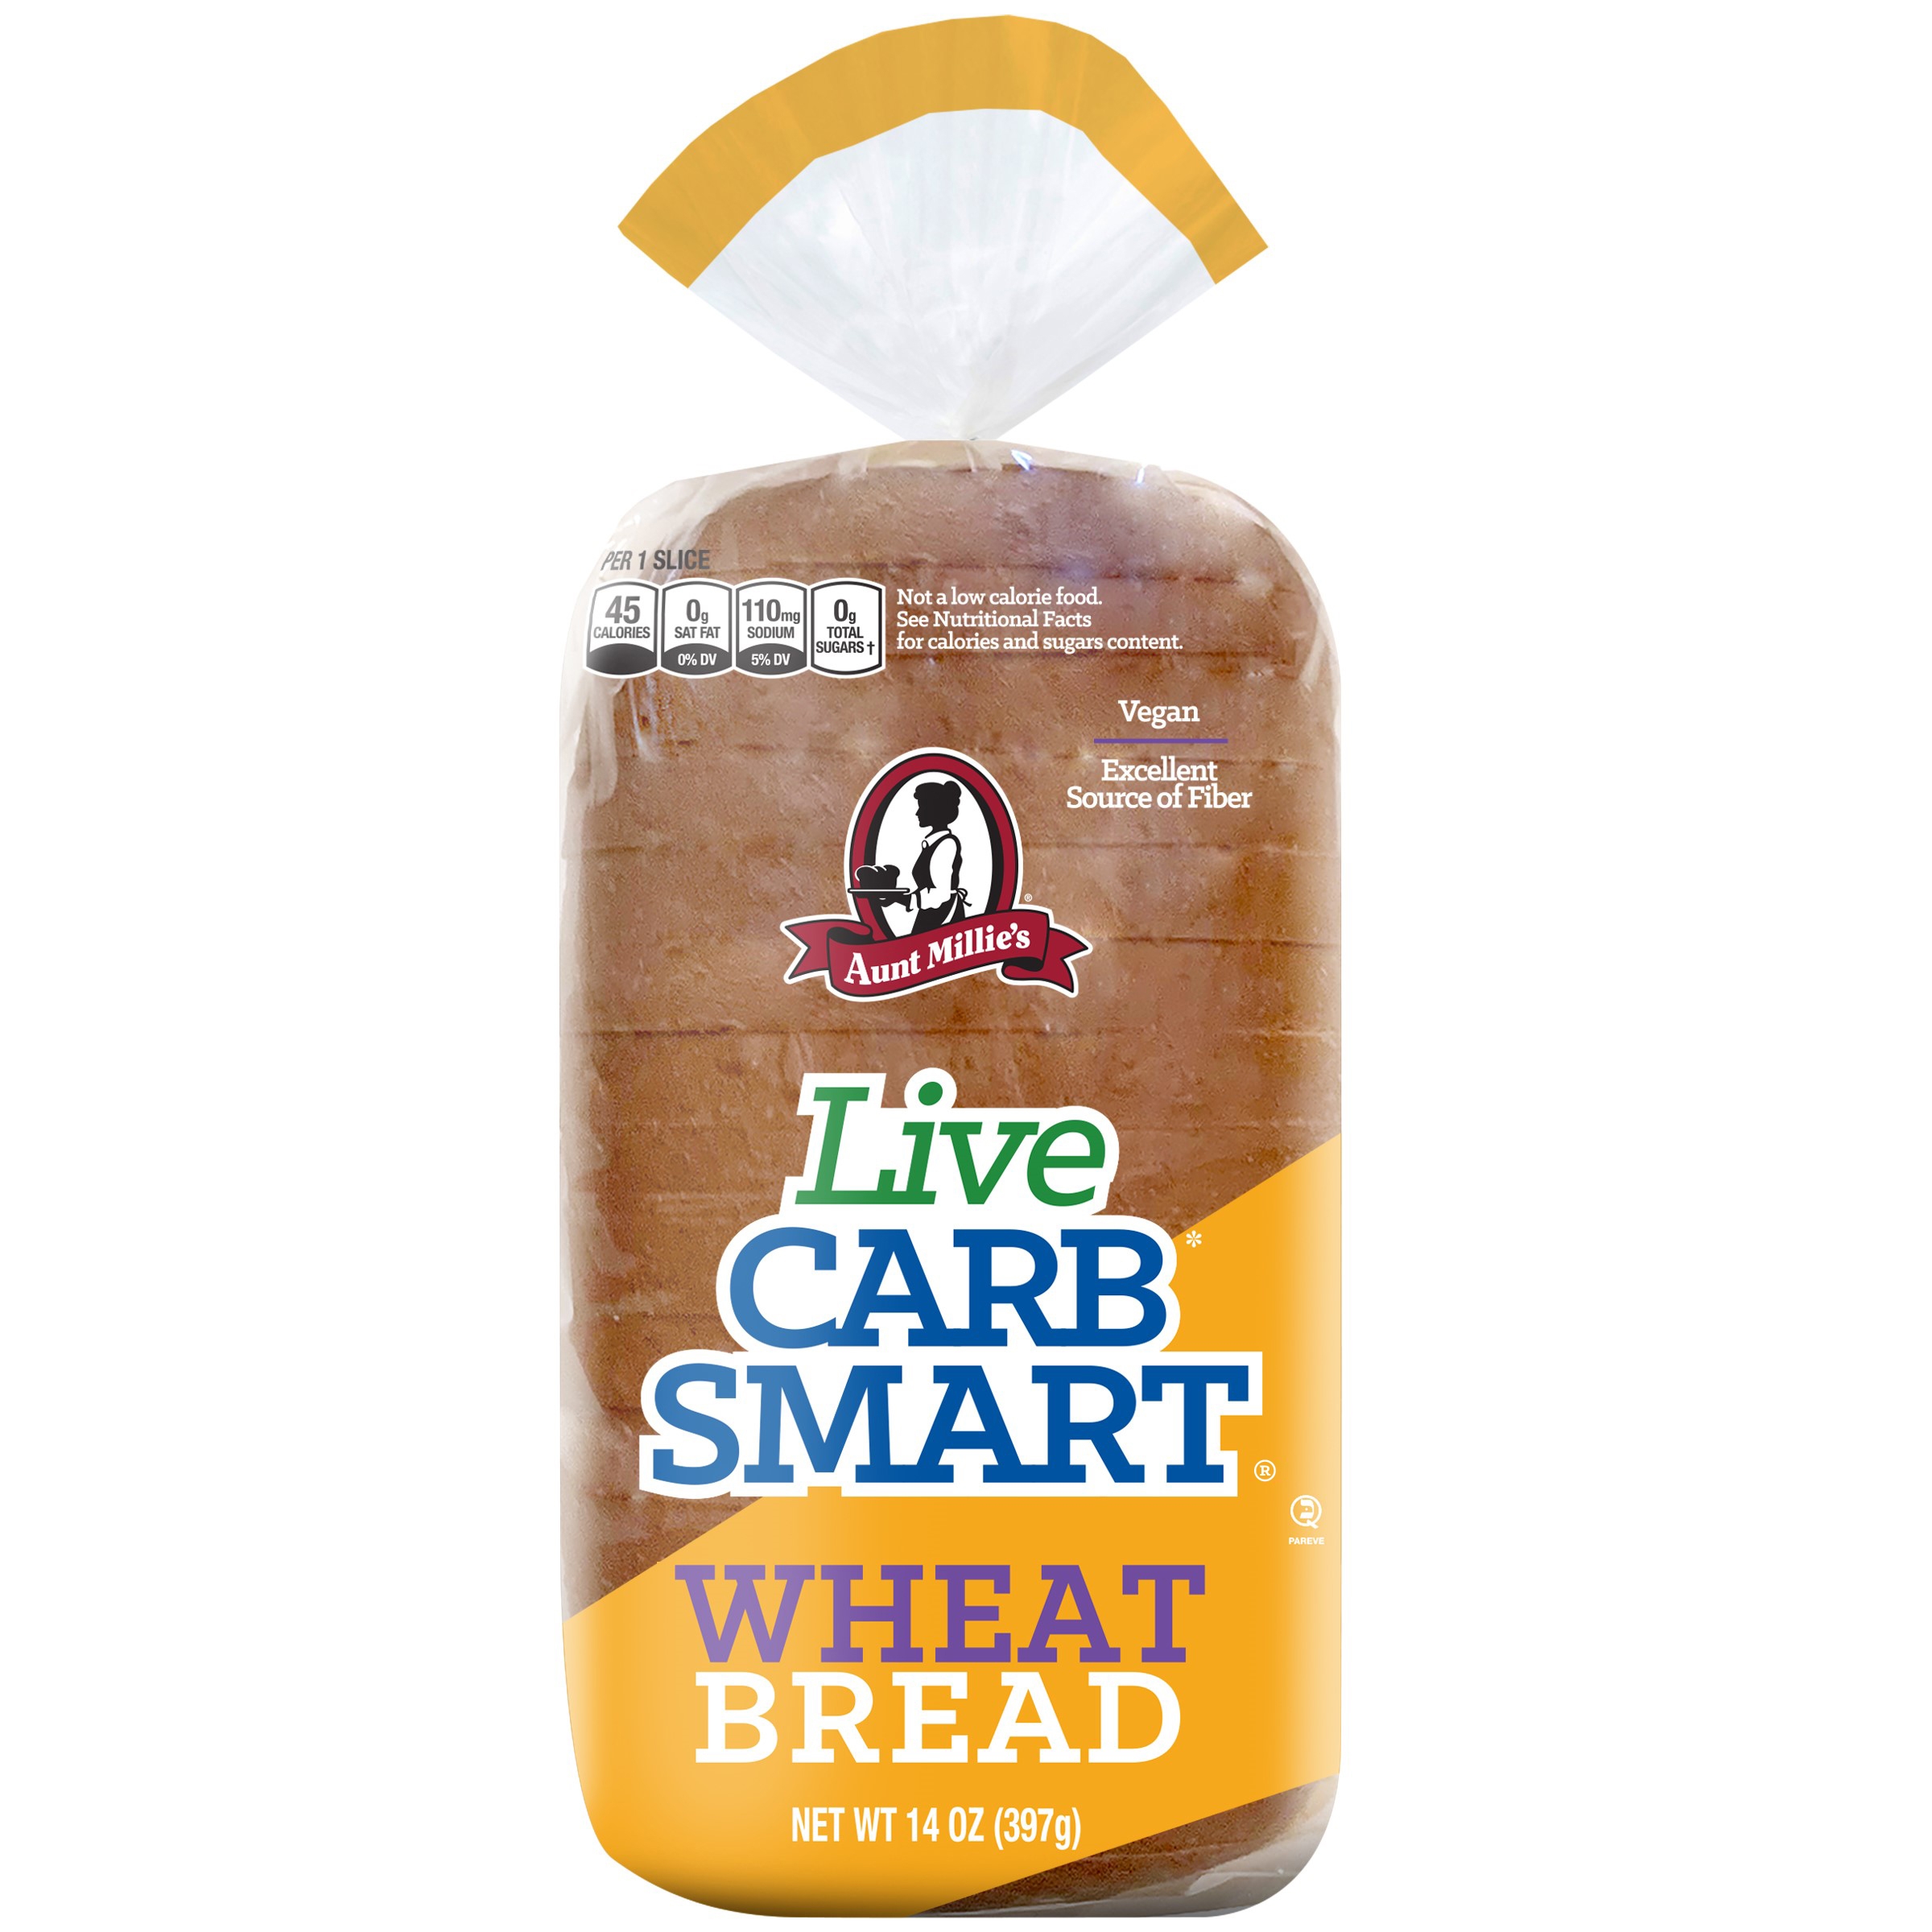 Carb Smart Whole Wheat Bread